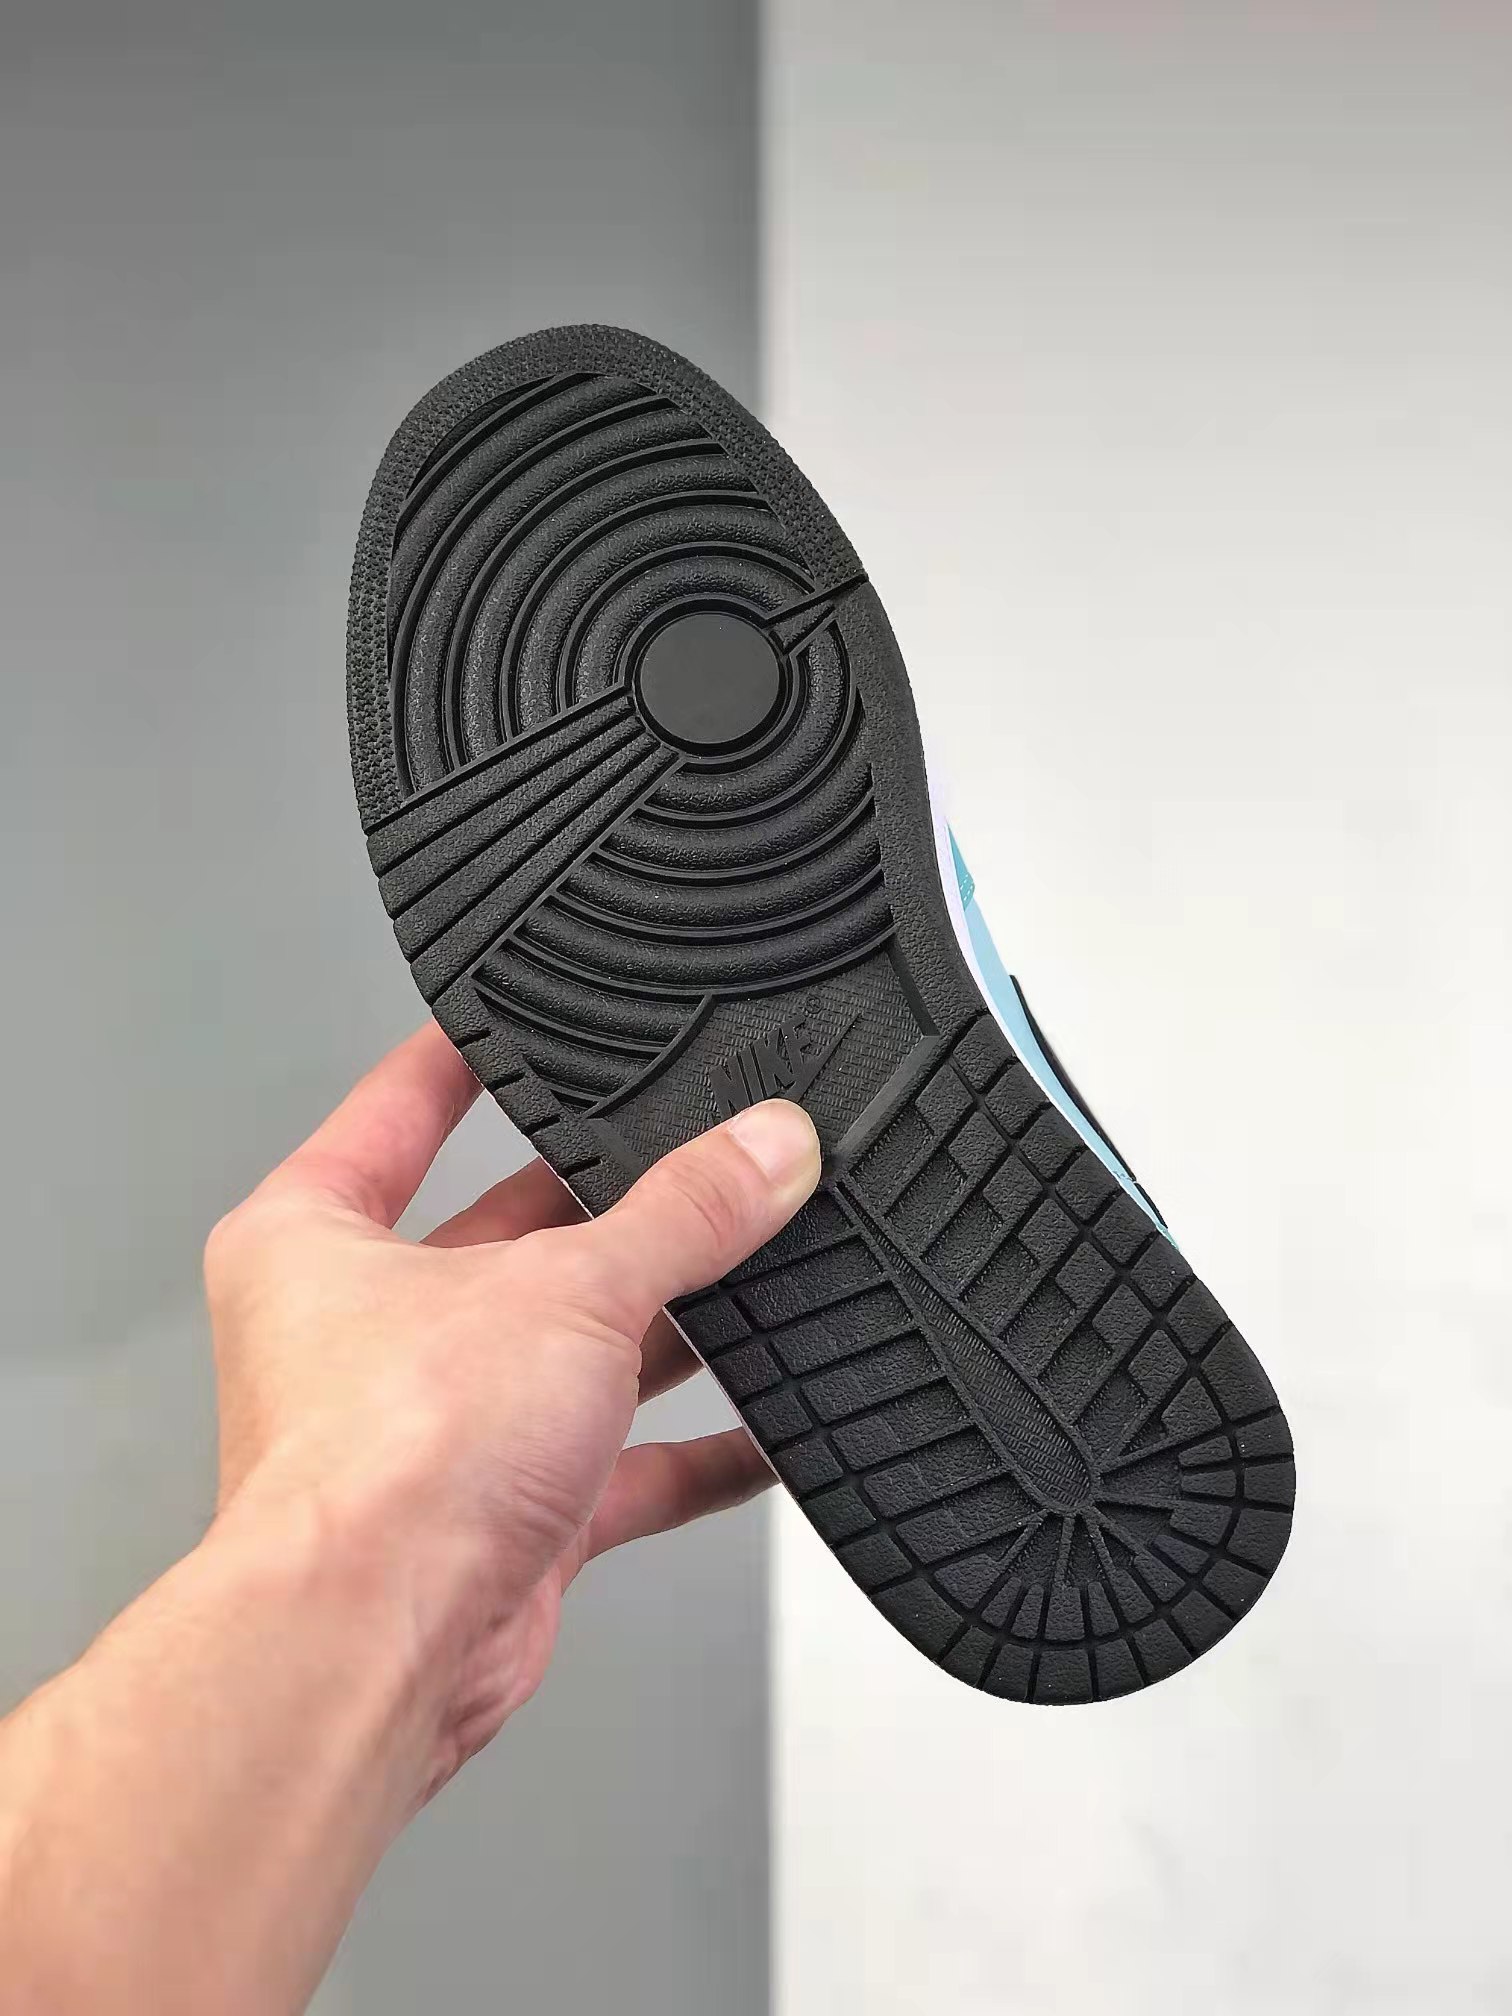 Air Jordan 1 Mid 'Aqua Black' BQ6472-300: Limited Edition Sneakers